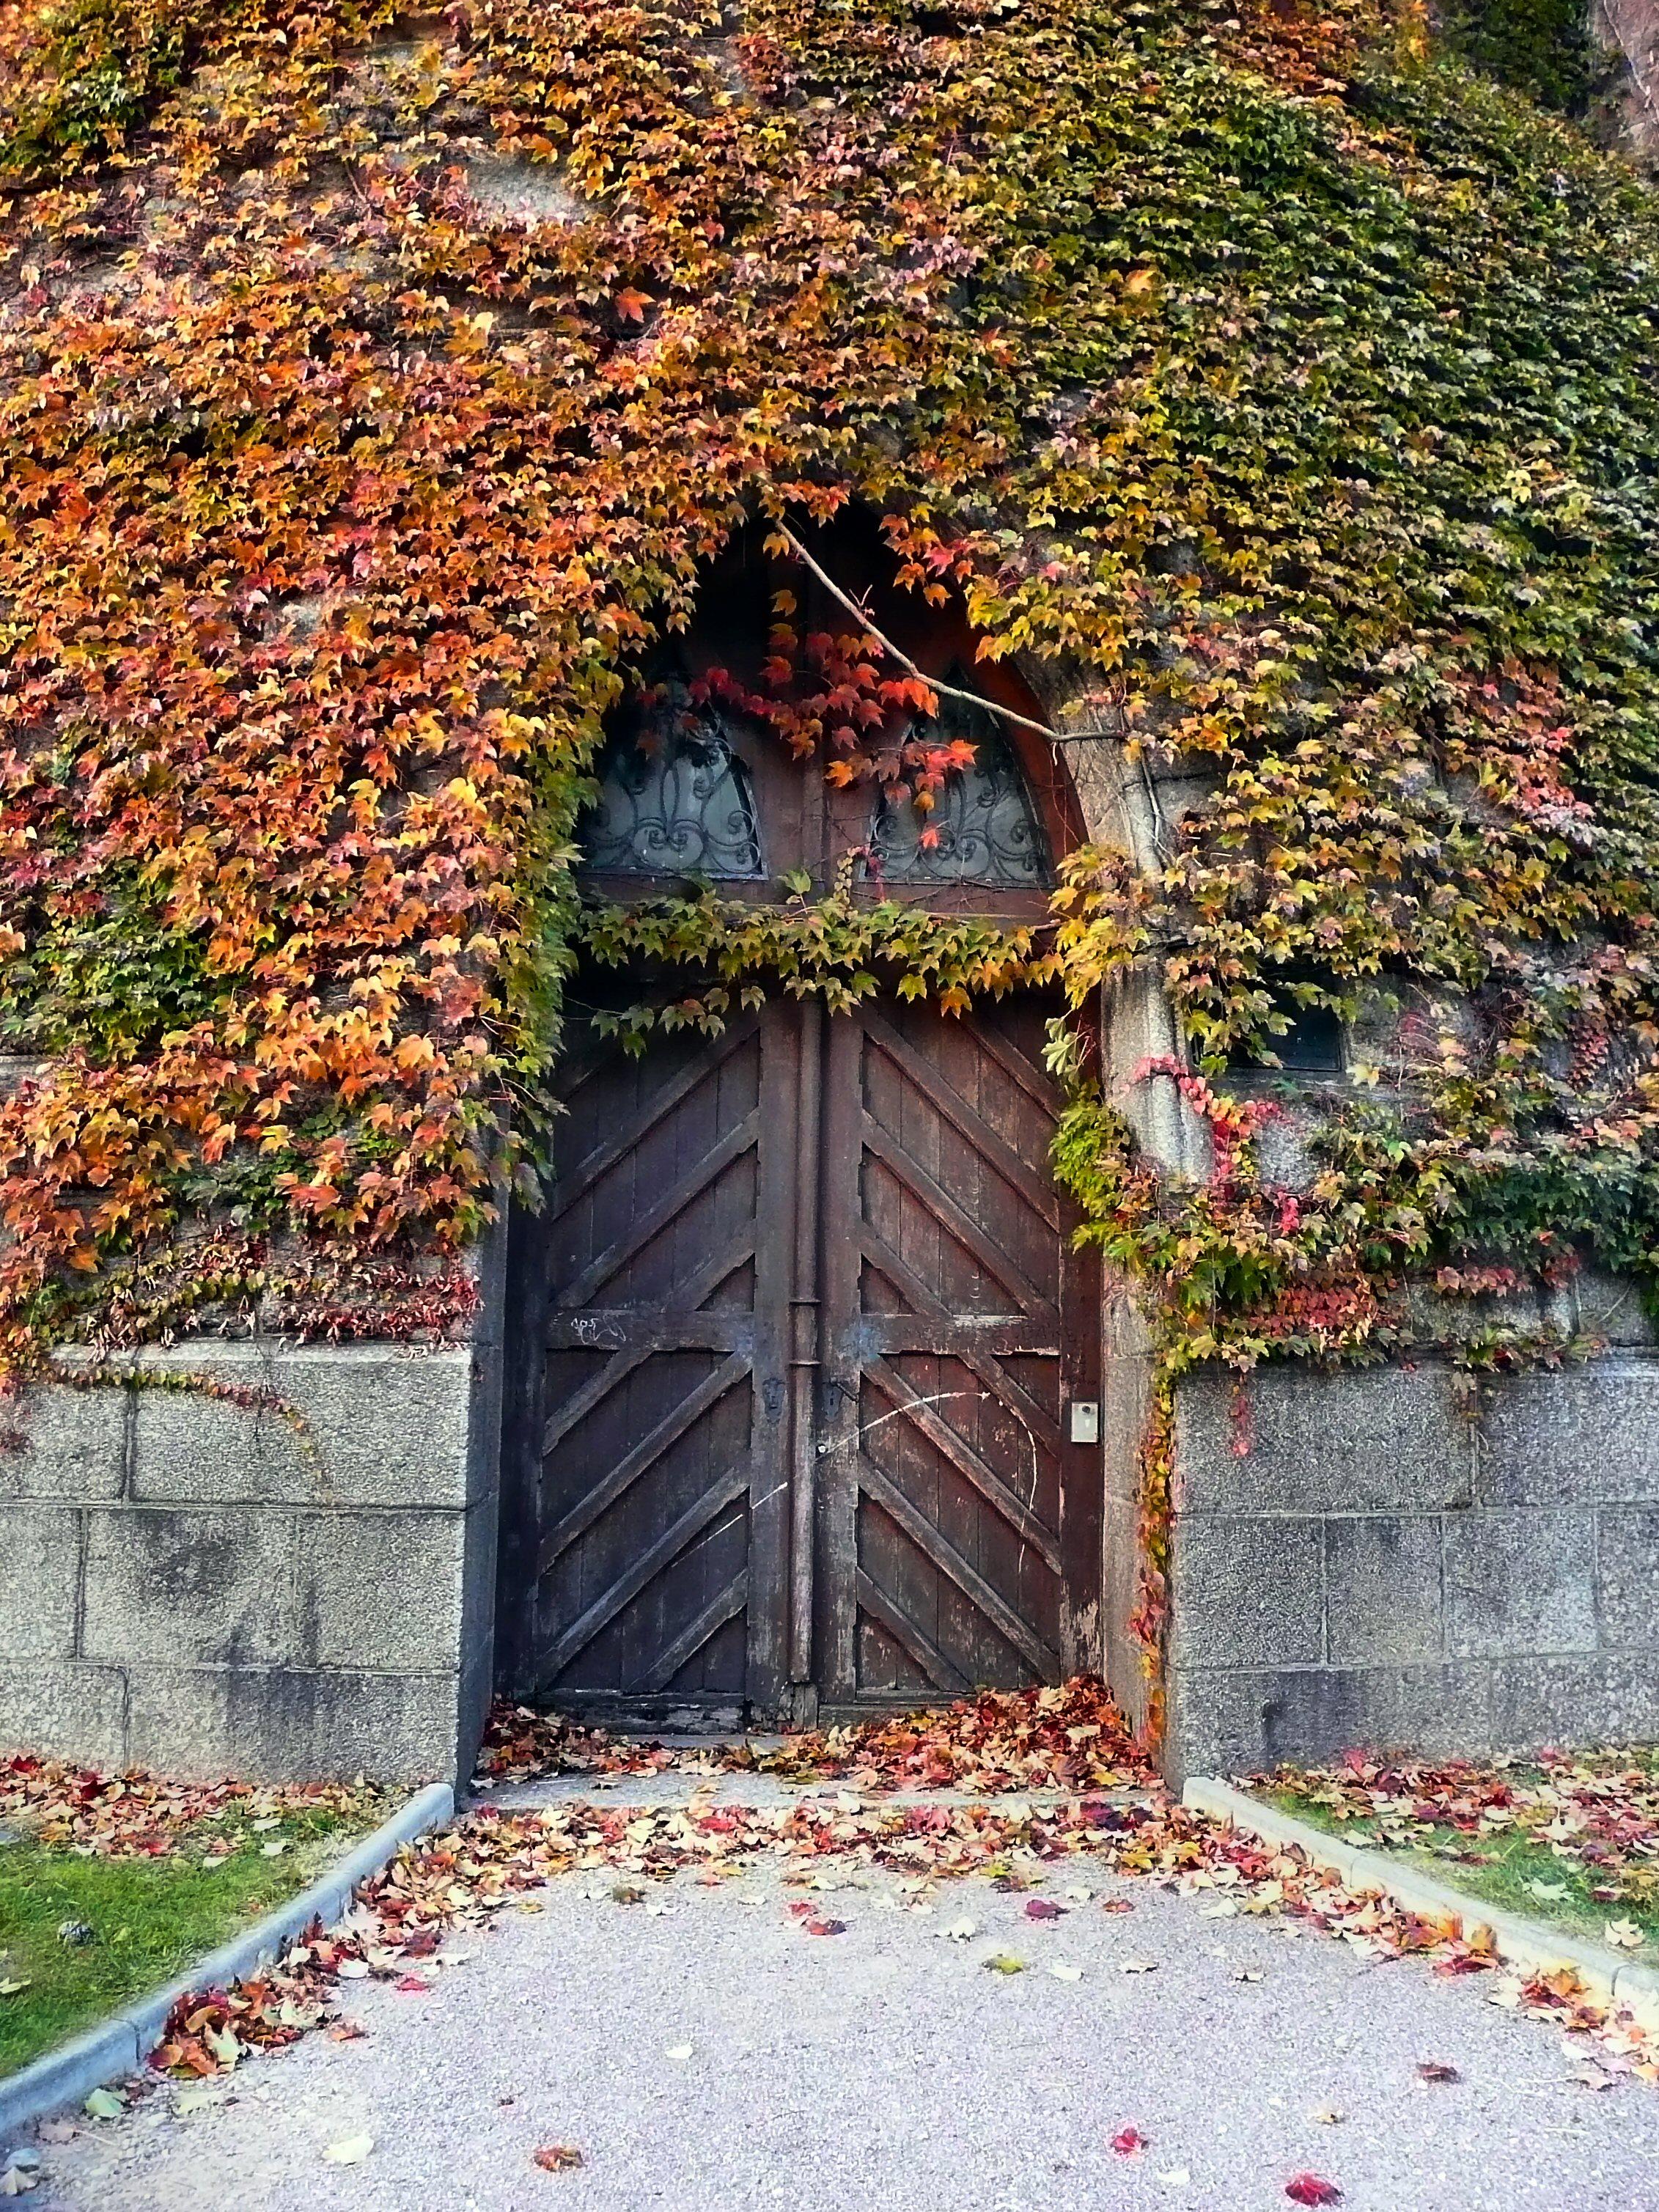 Entrance of Colmar's watertower